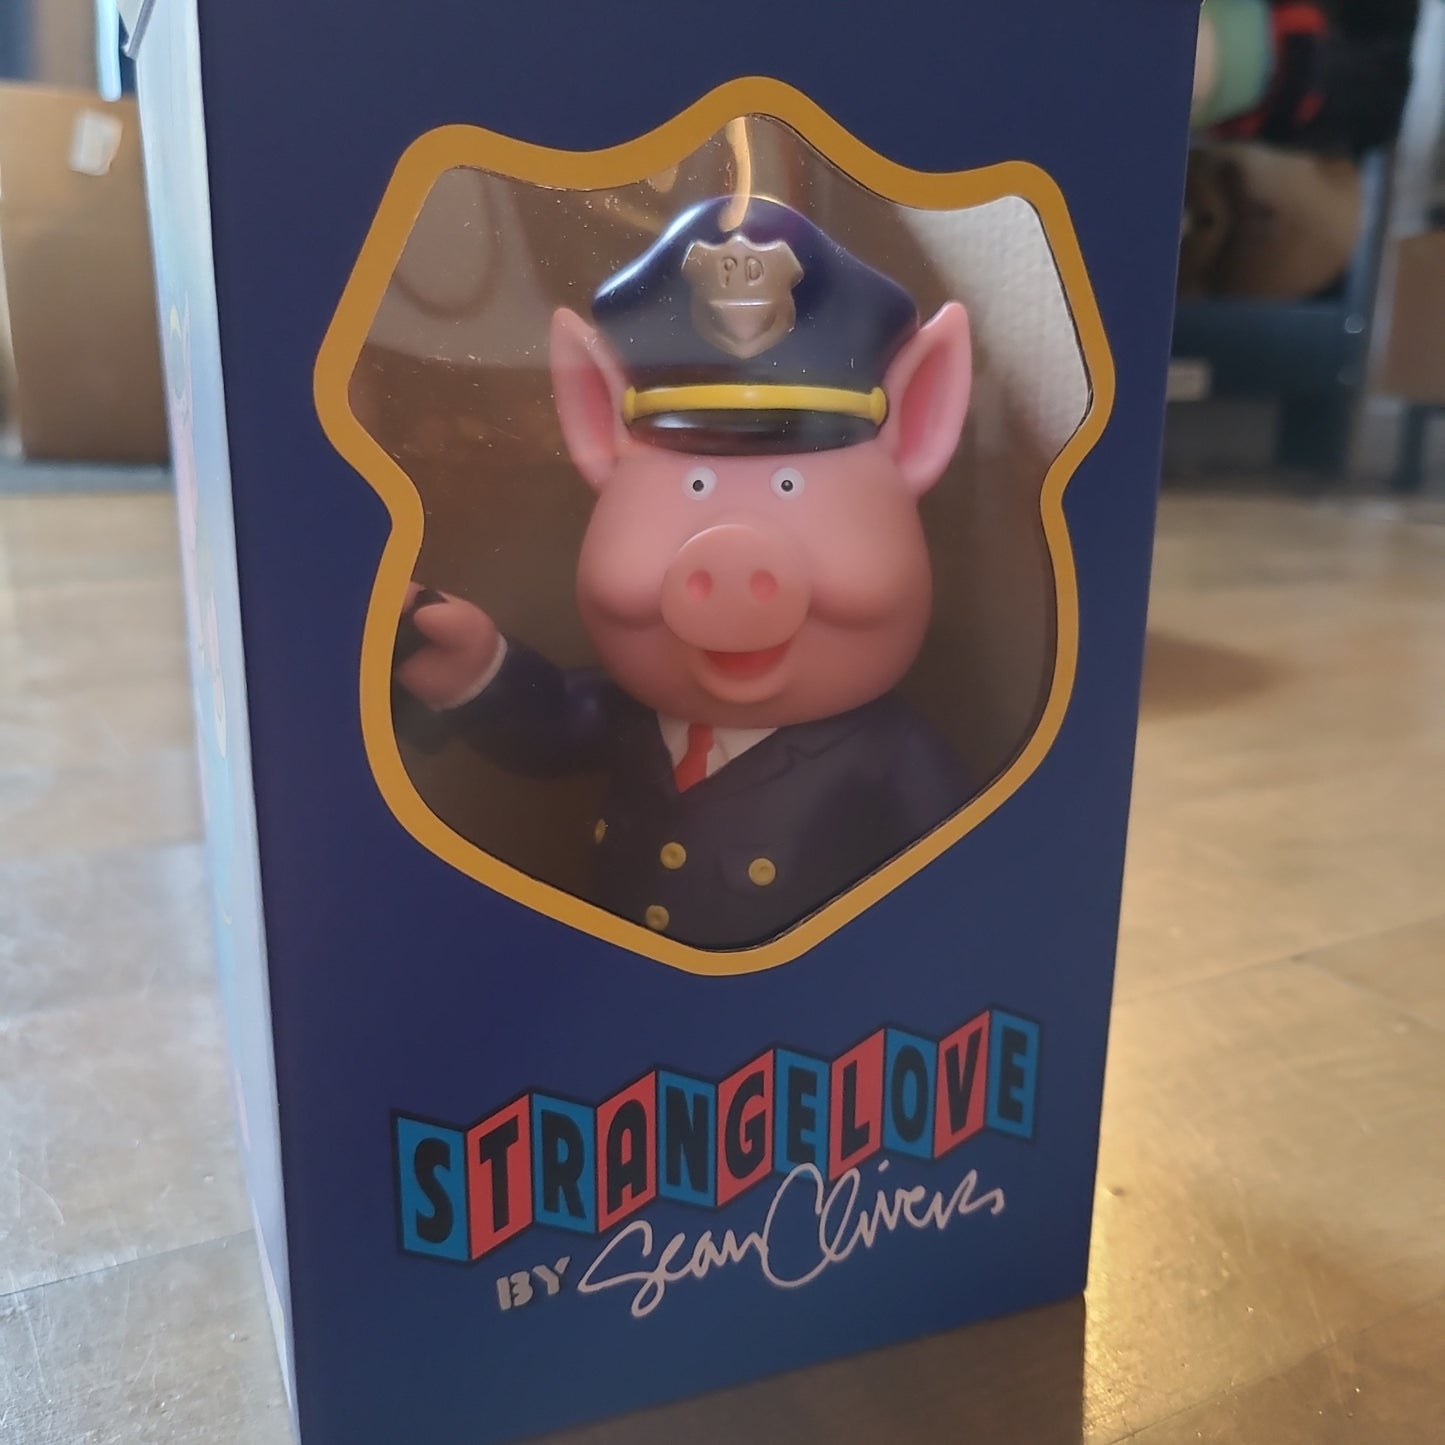 Strangelove - Pig Sergeant Vinyl Toy (Baton)